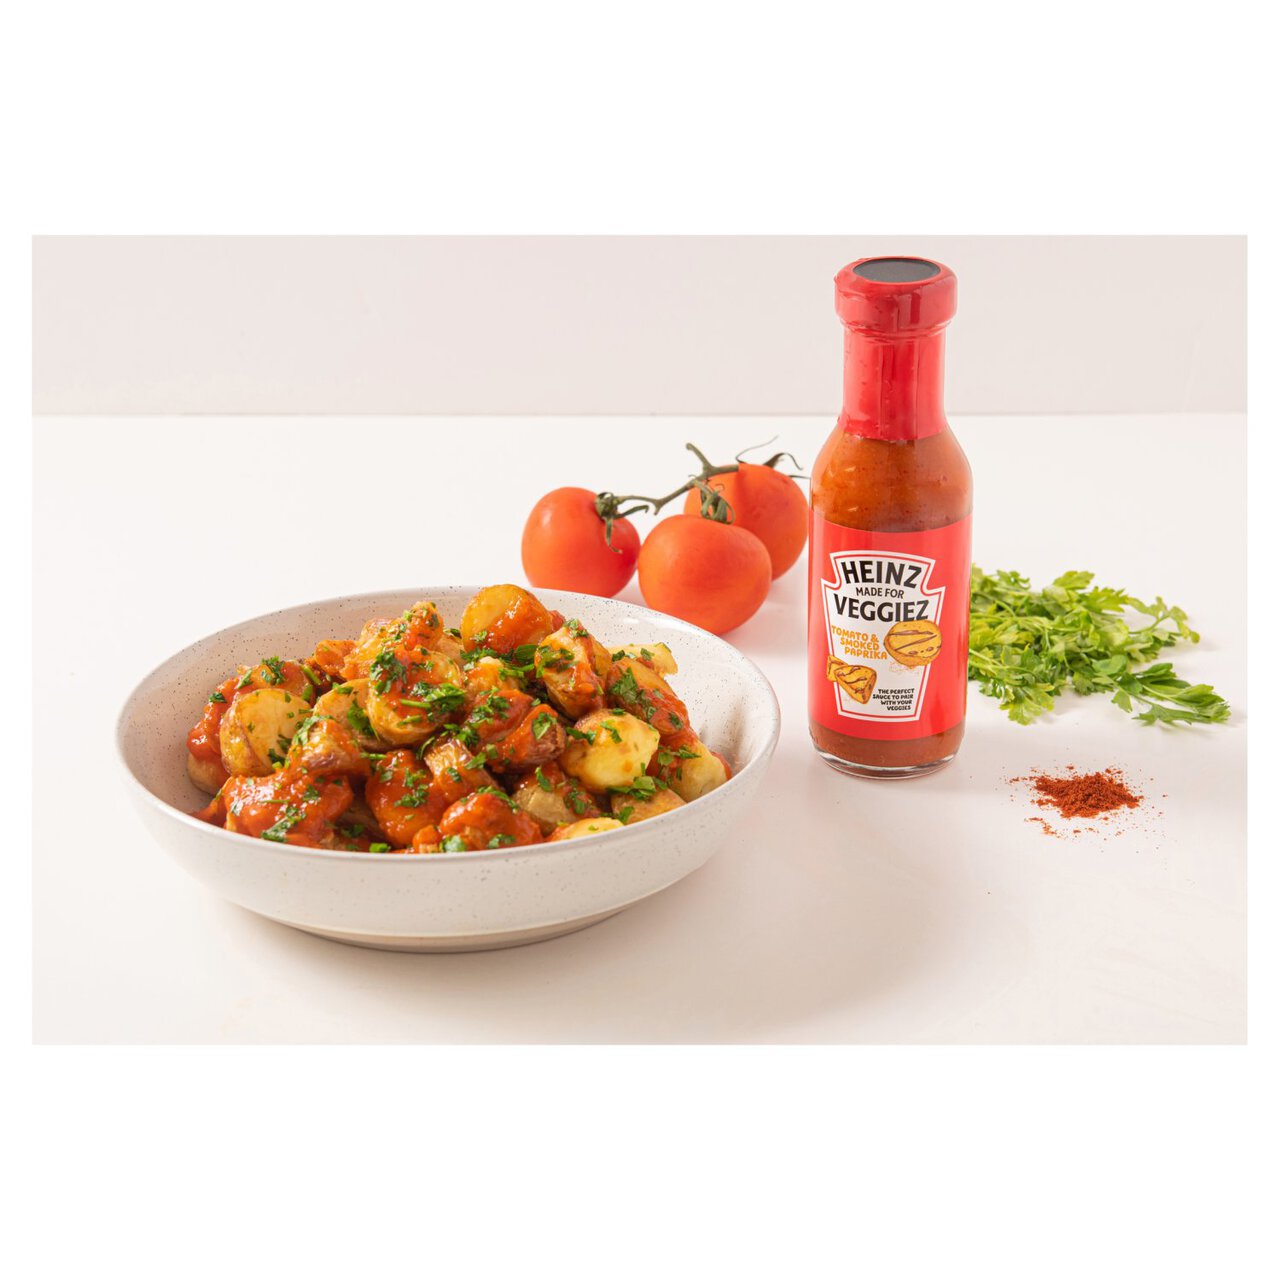 Heinz Made for Veggies - Tomato & Paprika Dipping Sauce 250ml